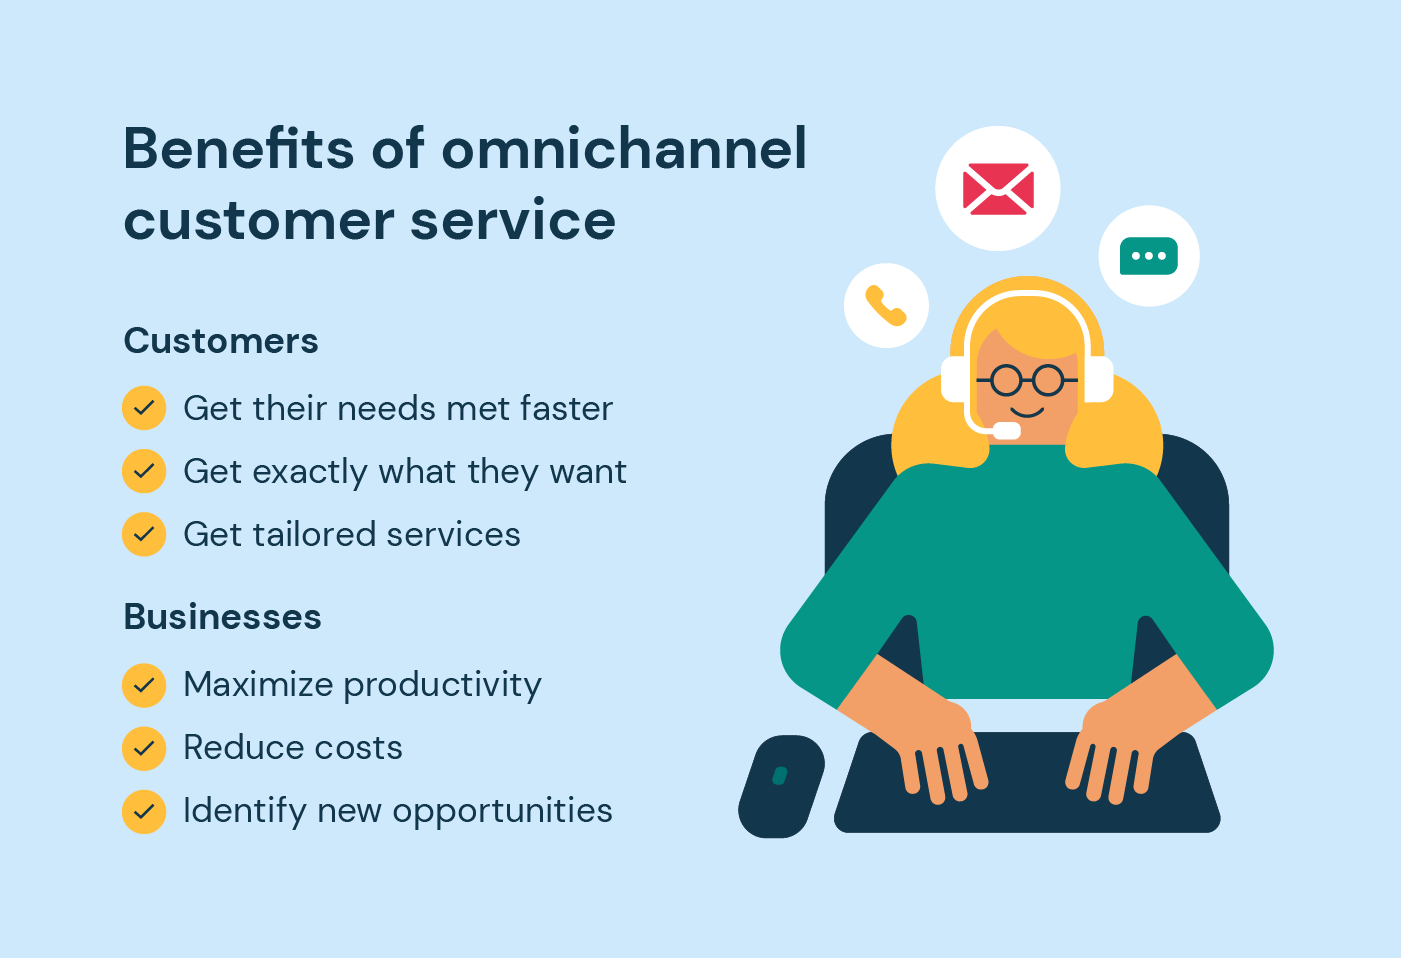 Image explaining benefits of omnichannel customer service.